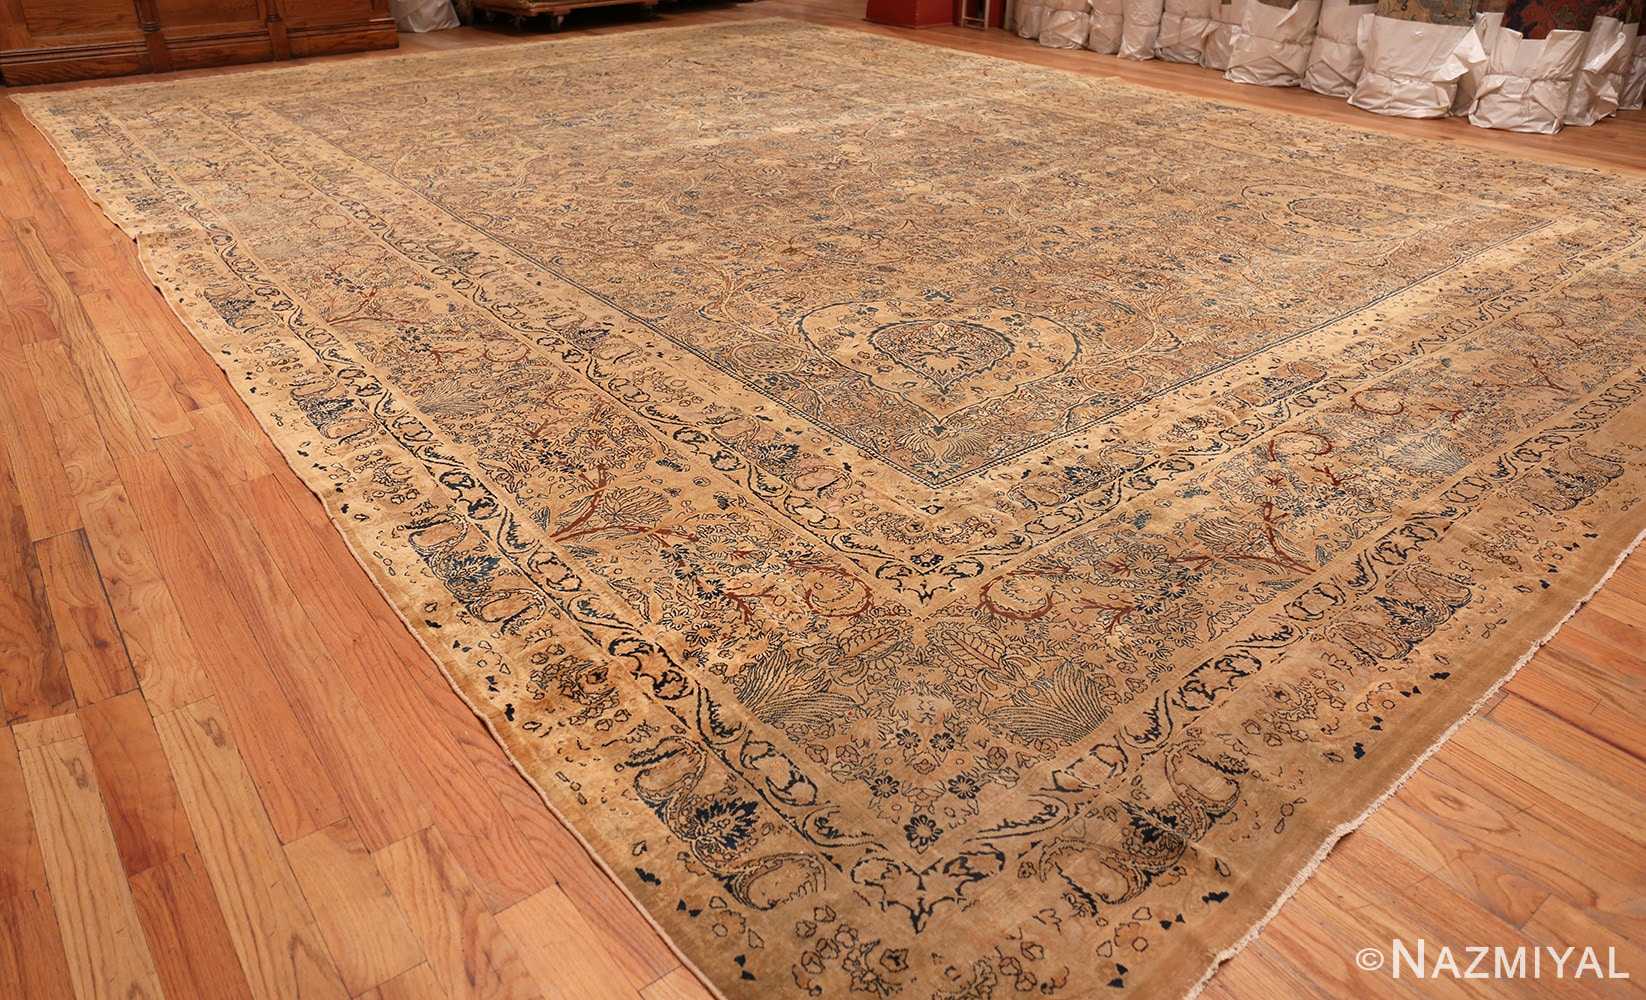 Full Large oversized Antique Persian Kerman rug 42880 by Nazmiyal